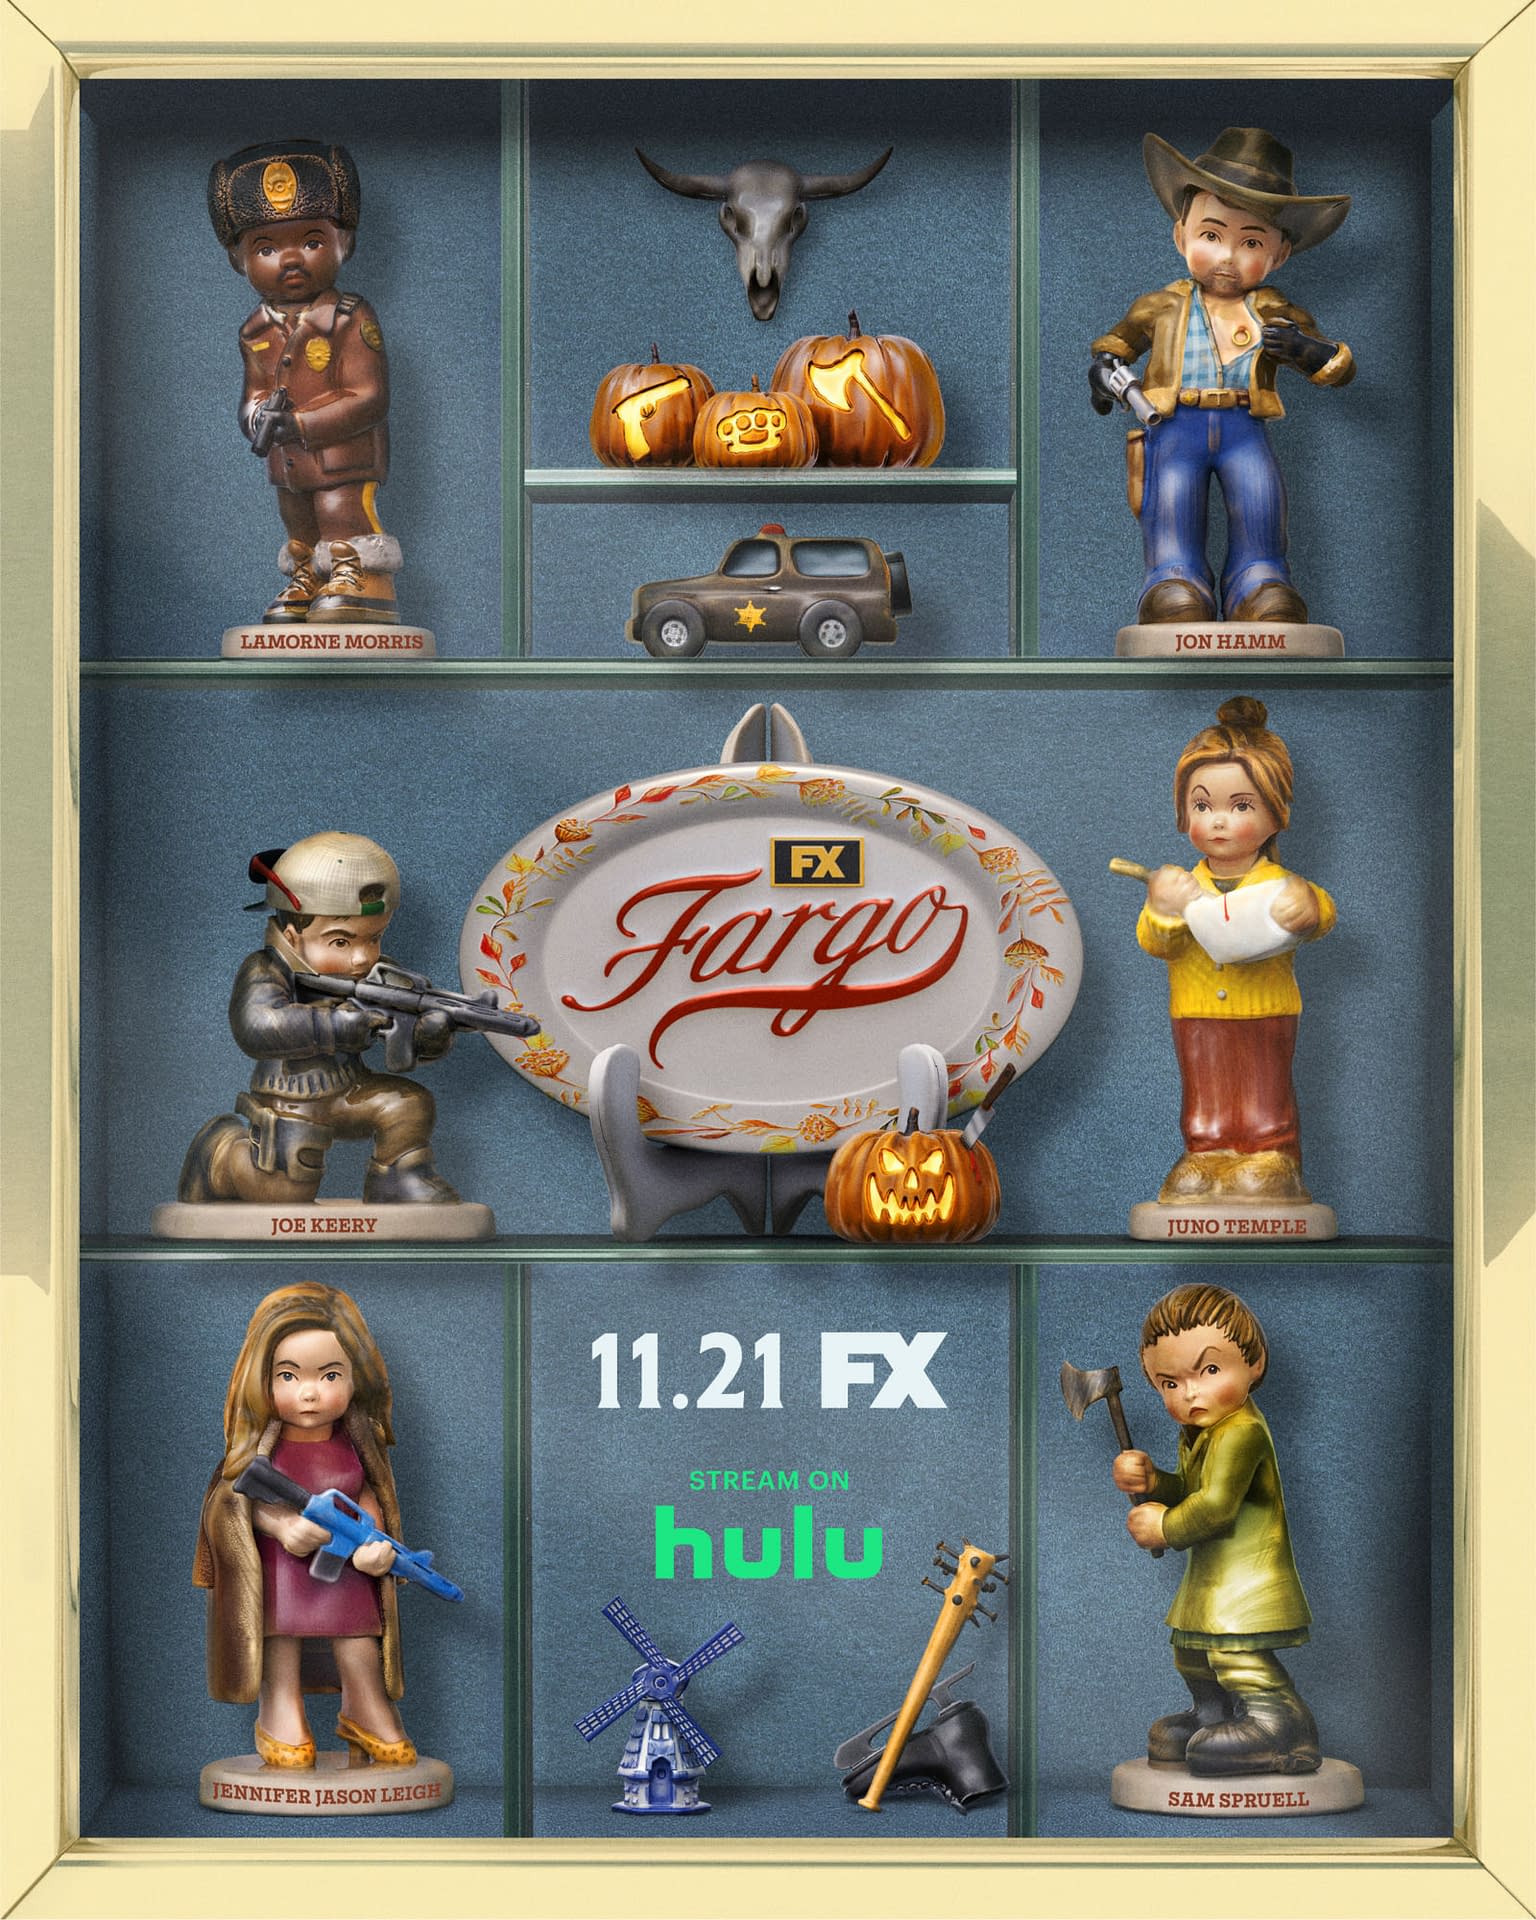 Fargo Season 5 FX Networks Confirms November Premiere; New Key Art